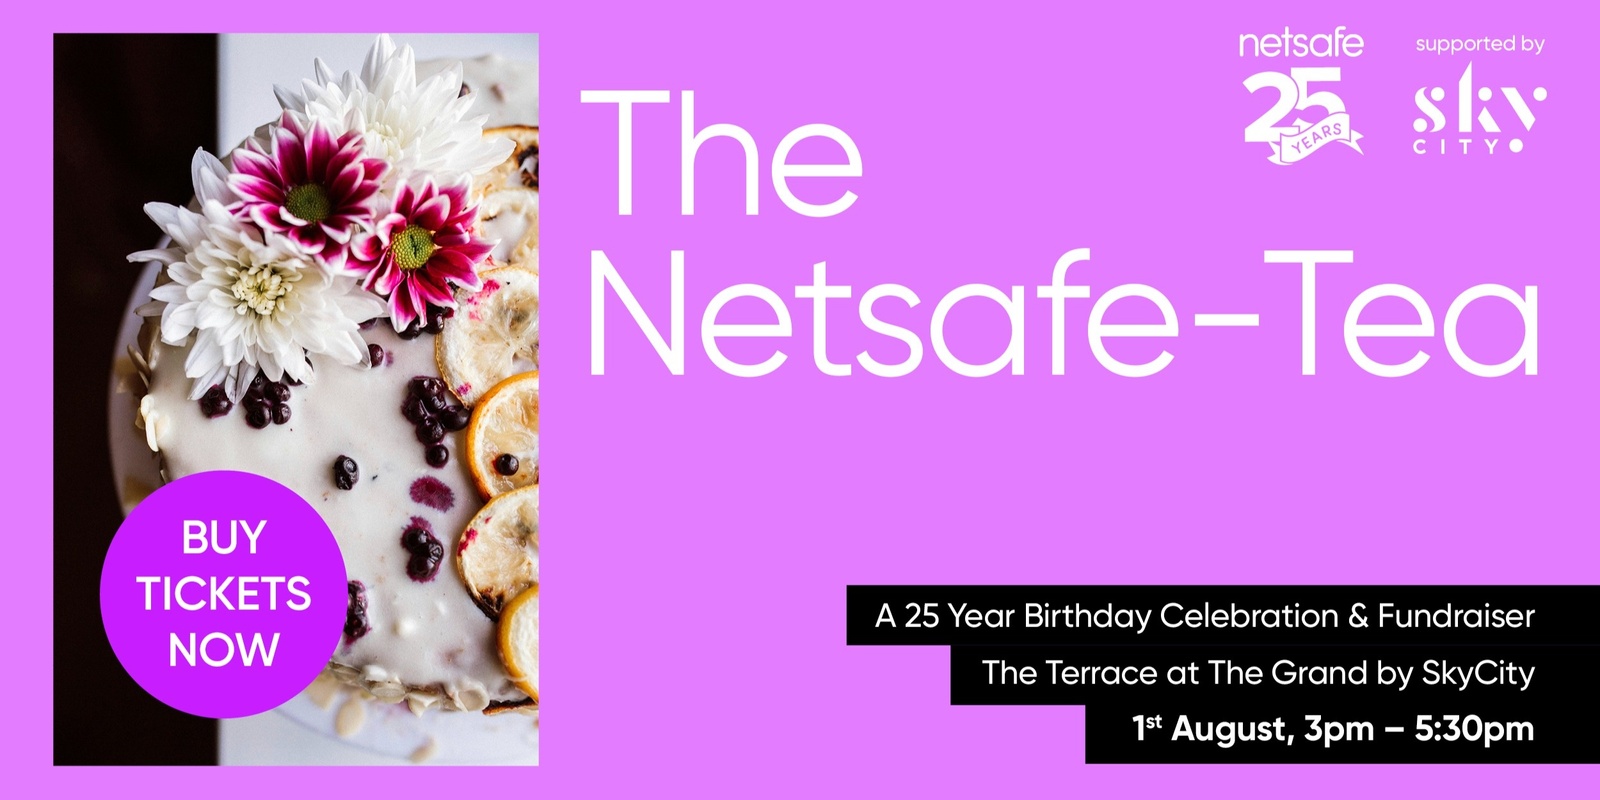 Banner image for The Netsafe-Tea